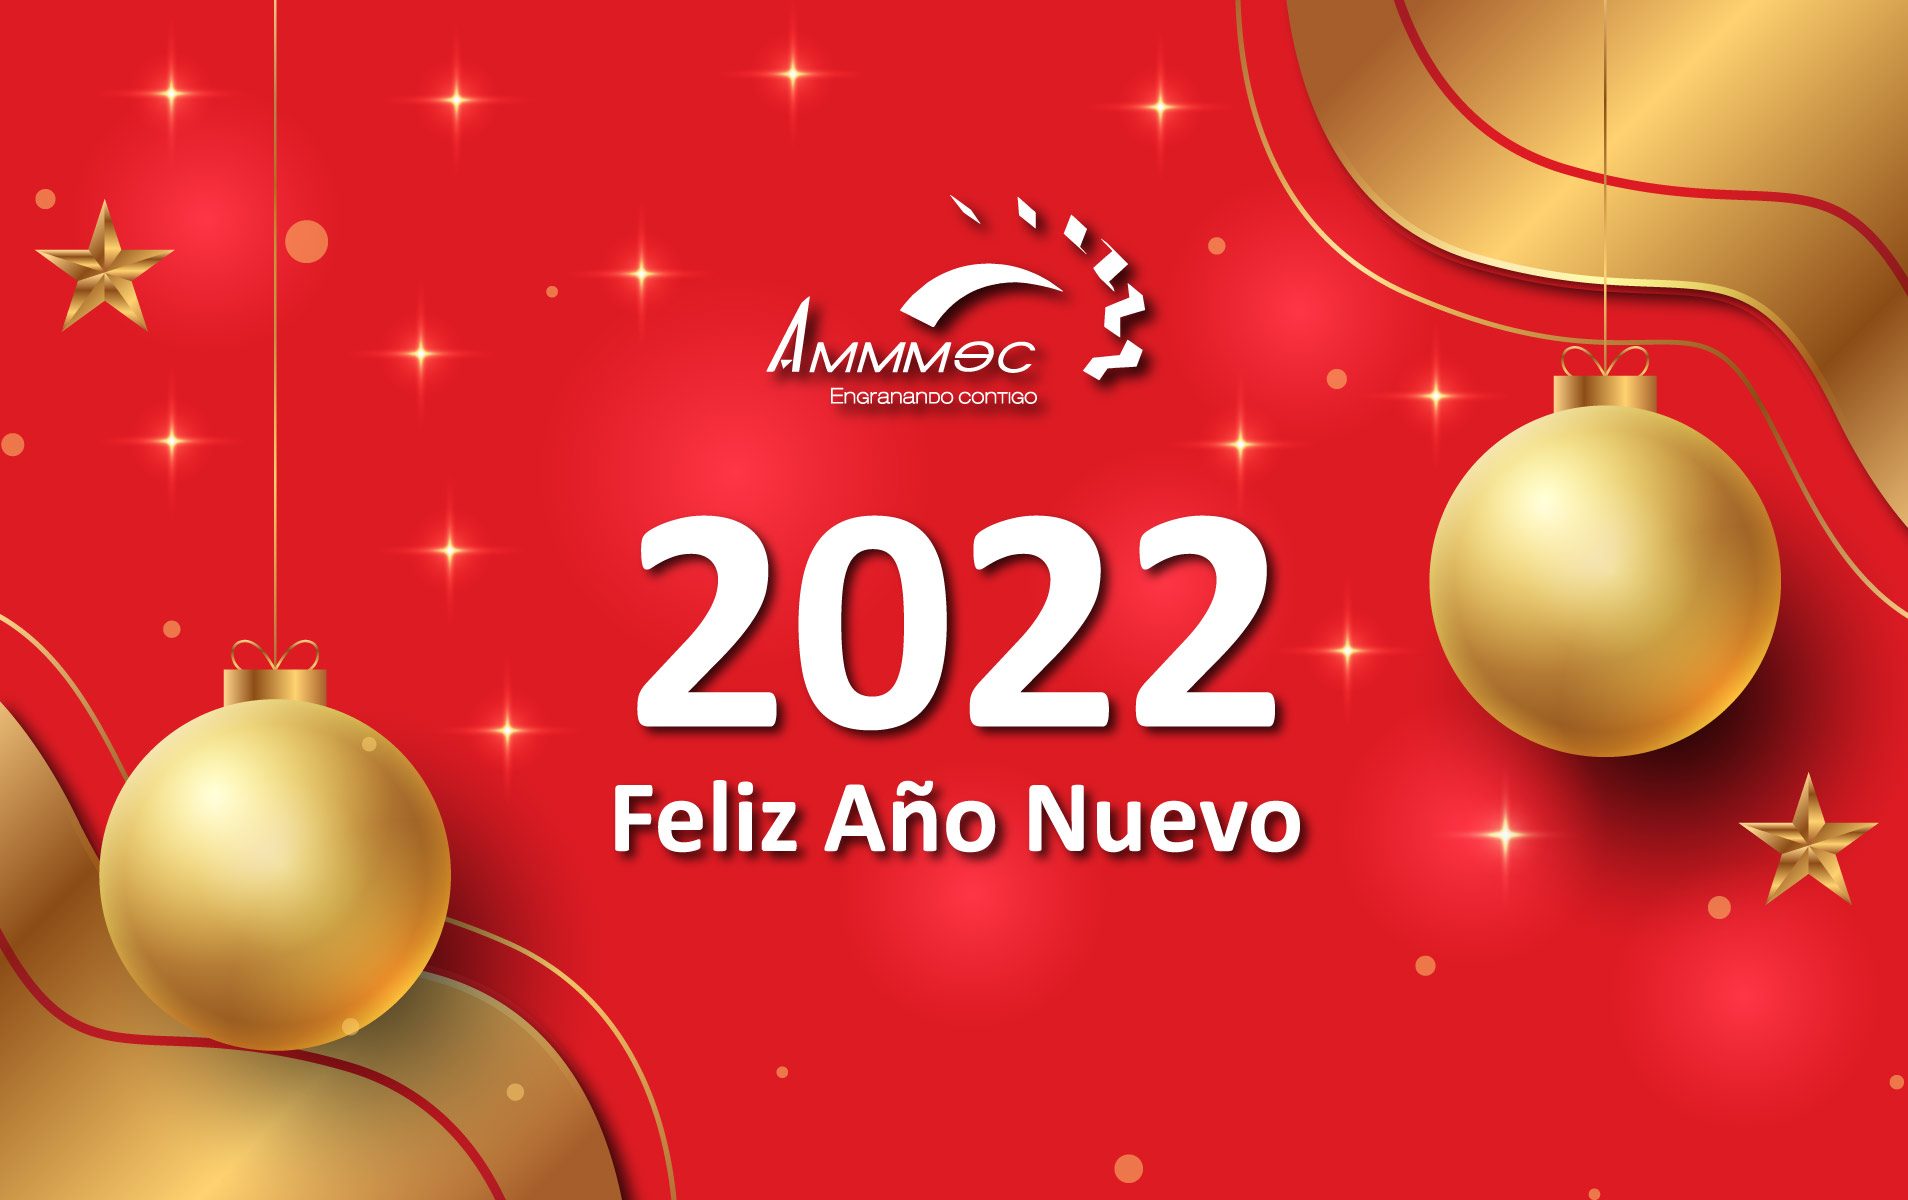 Feliz-ano-nuevo-AM-21